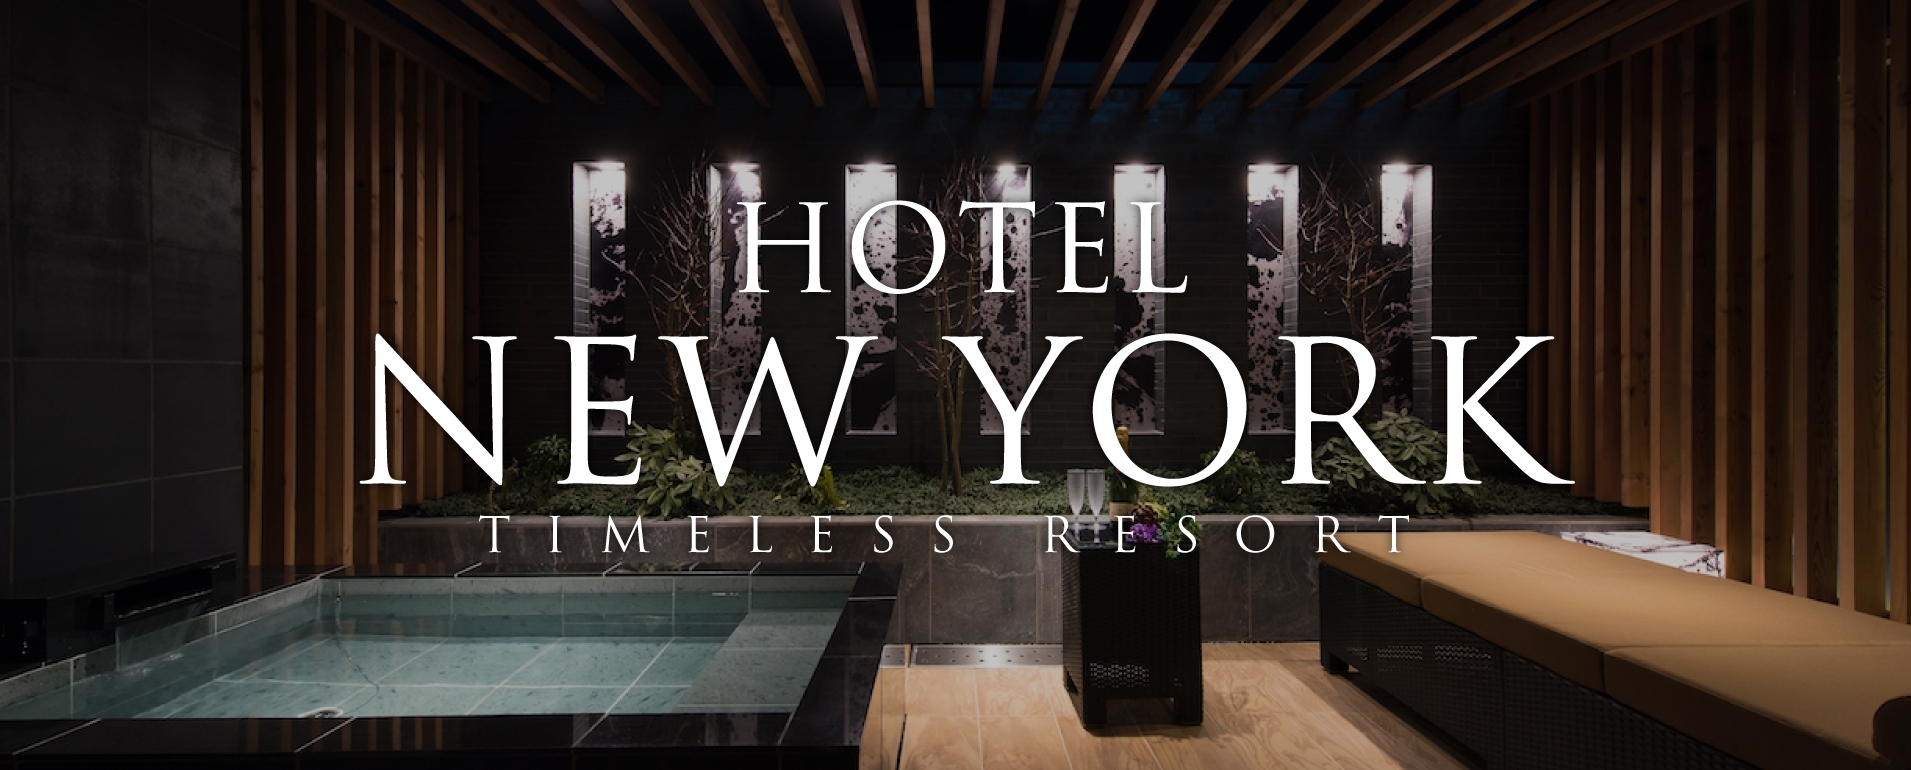 HOTEL NEW YORK